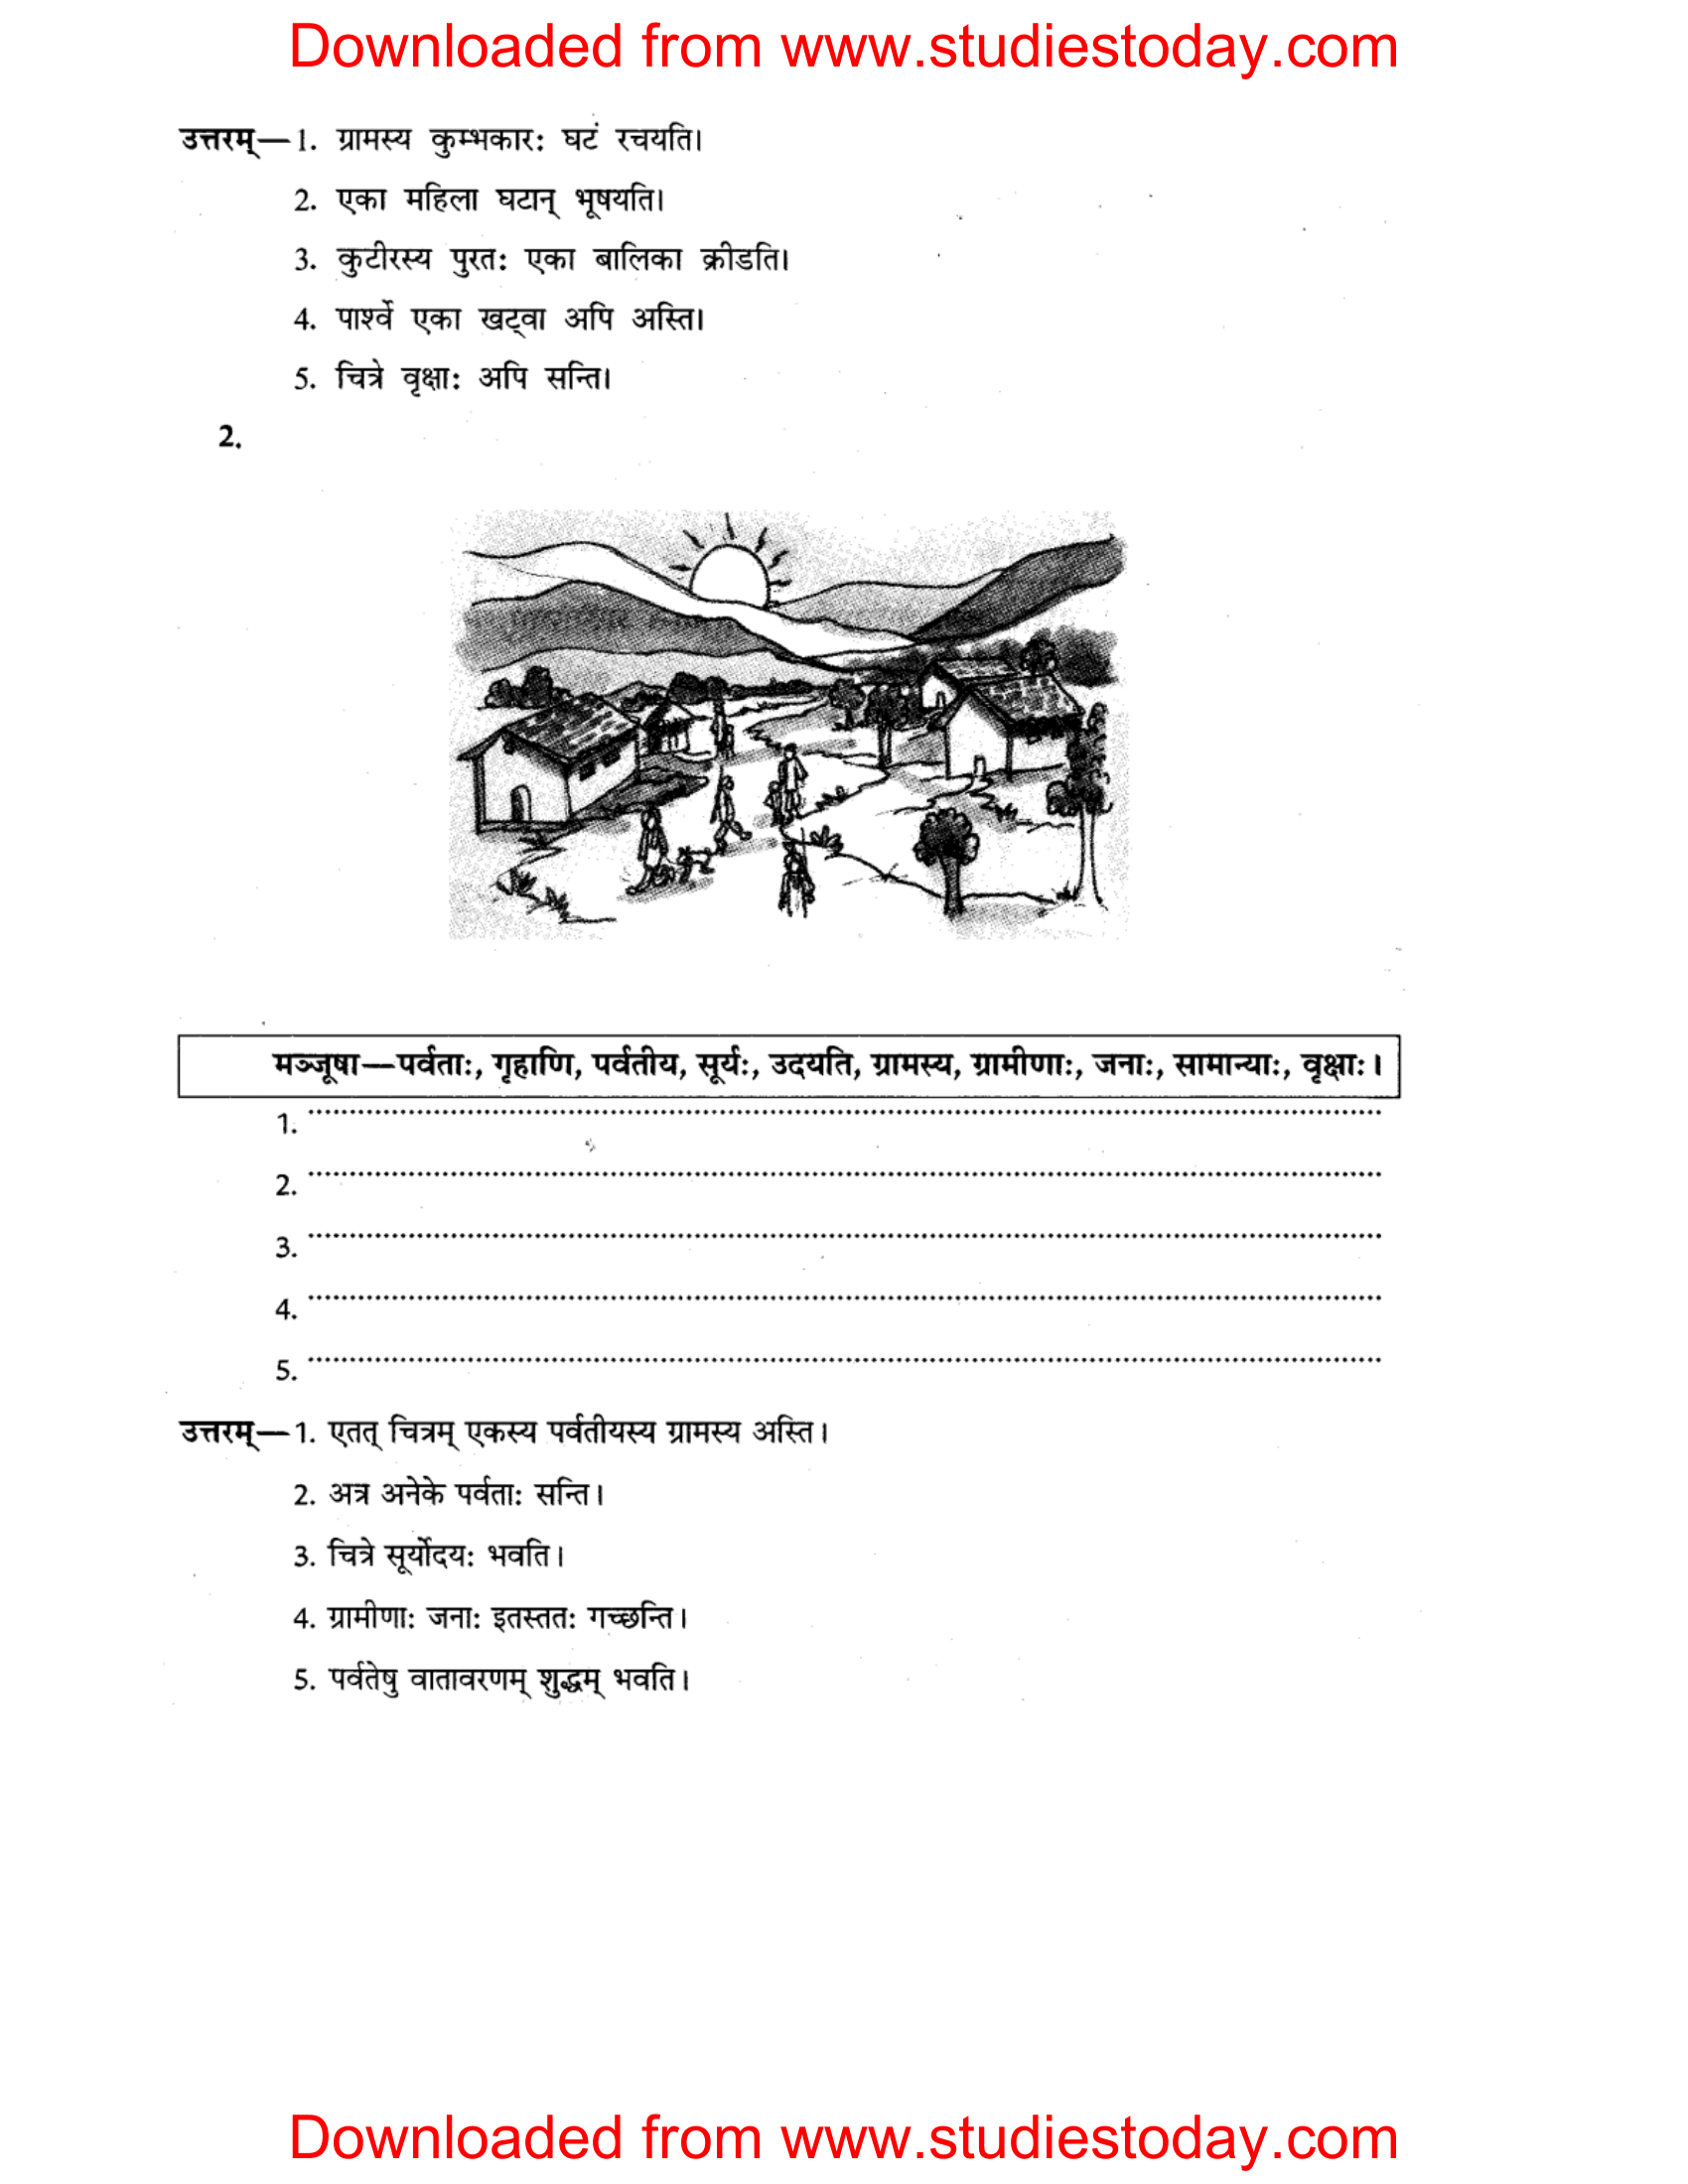 ncert-solutions-class-8-sanskrit-chapter-11-chitravarnan-2